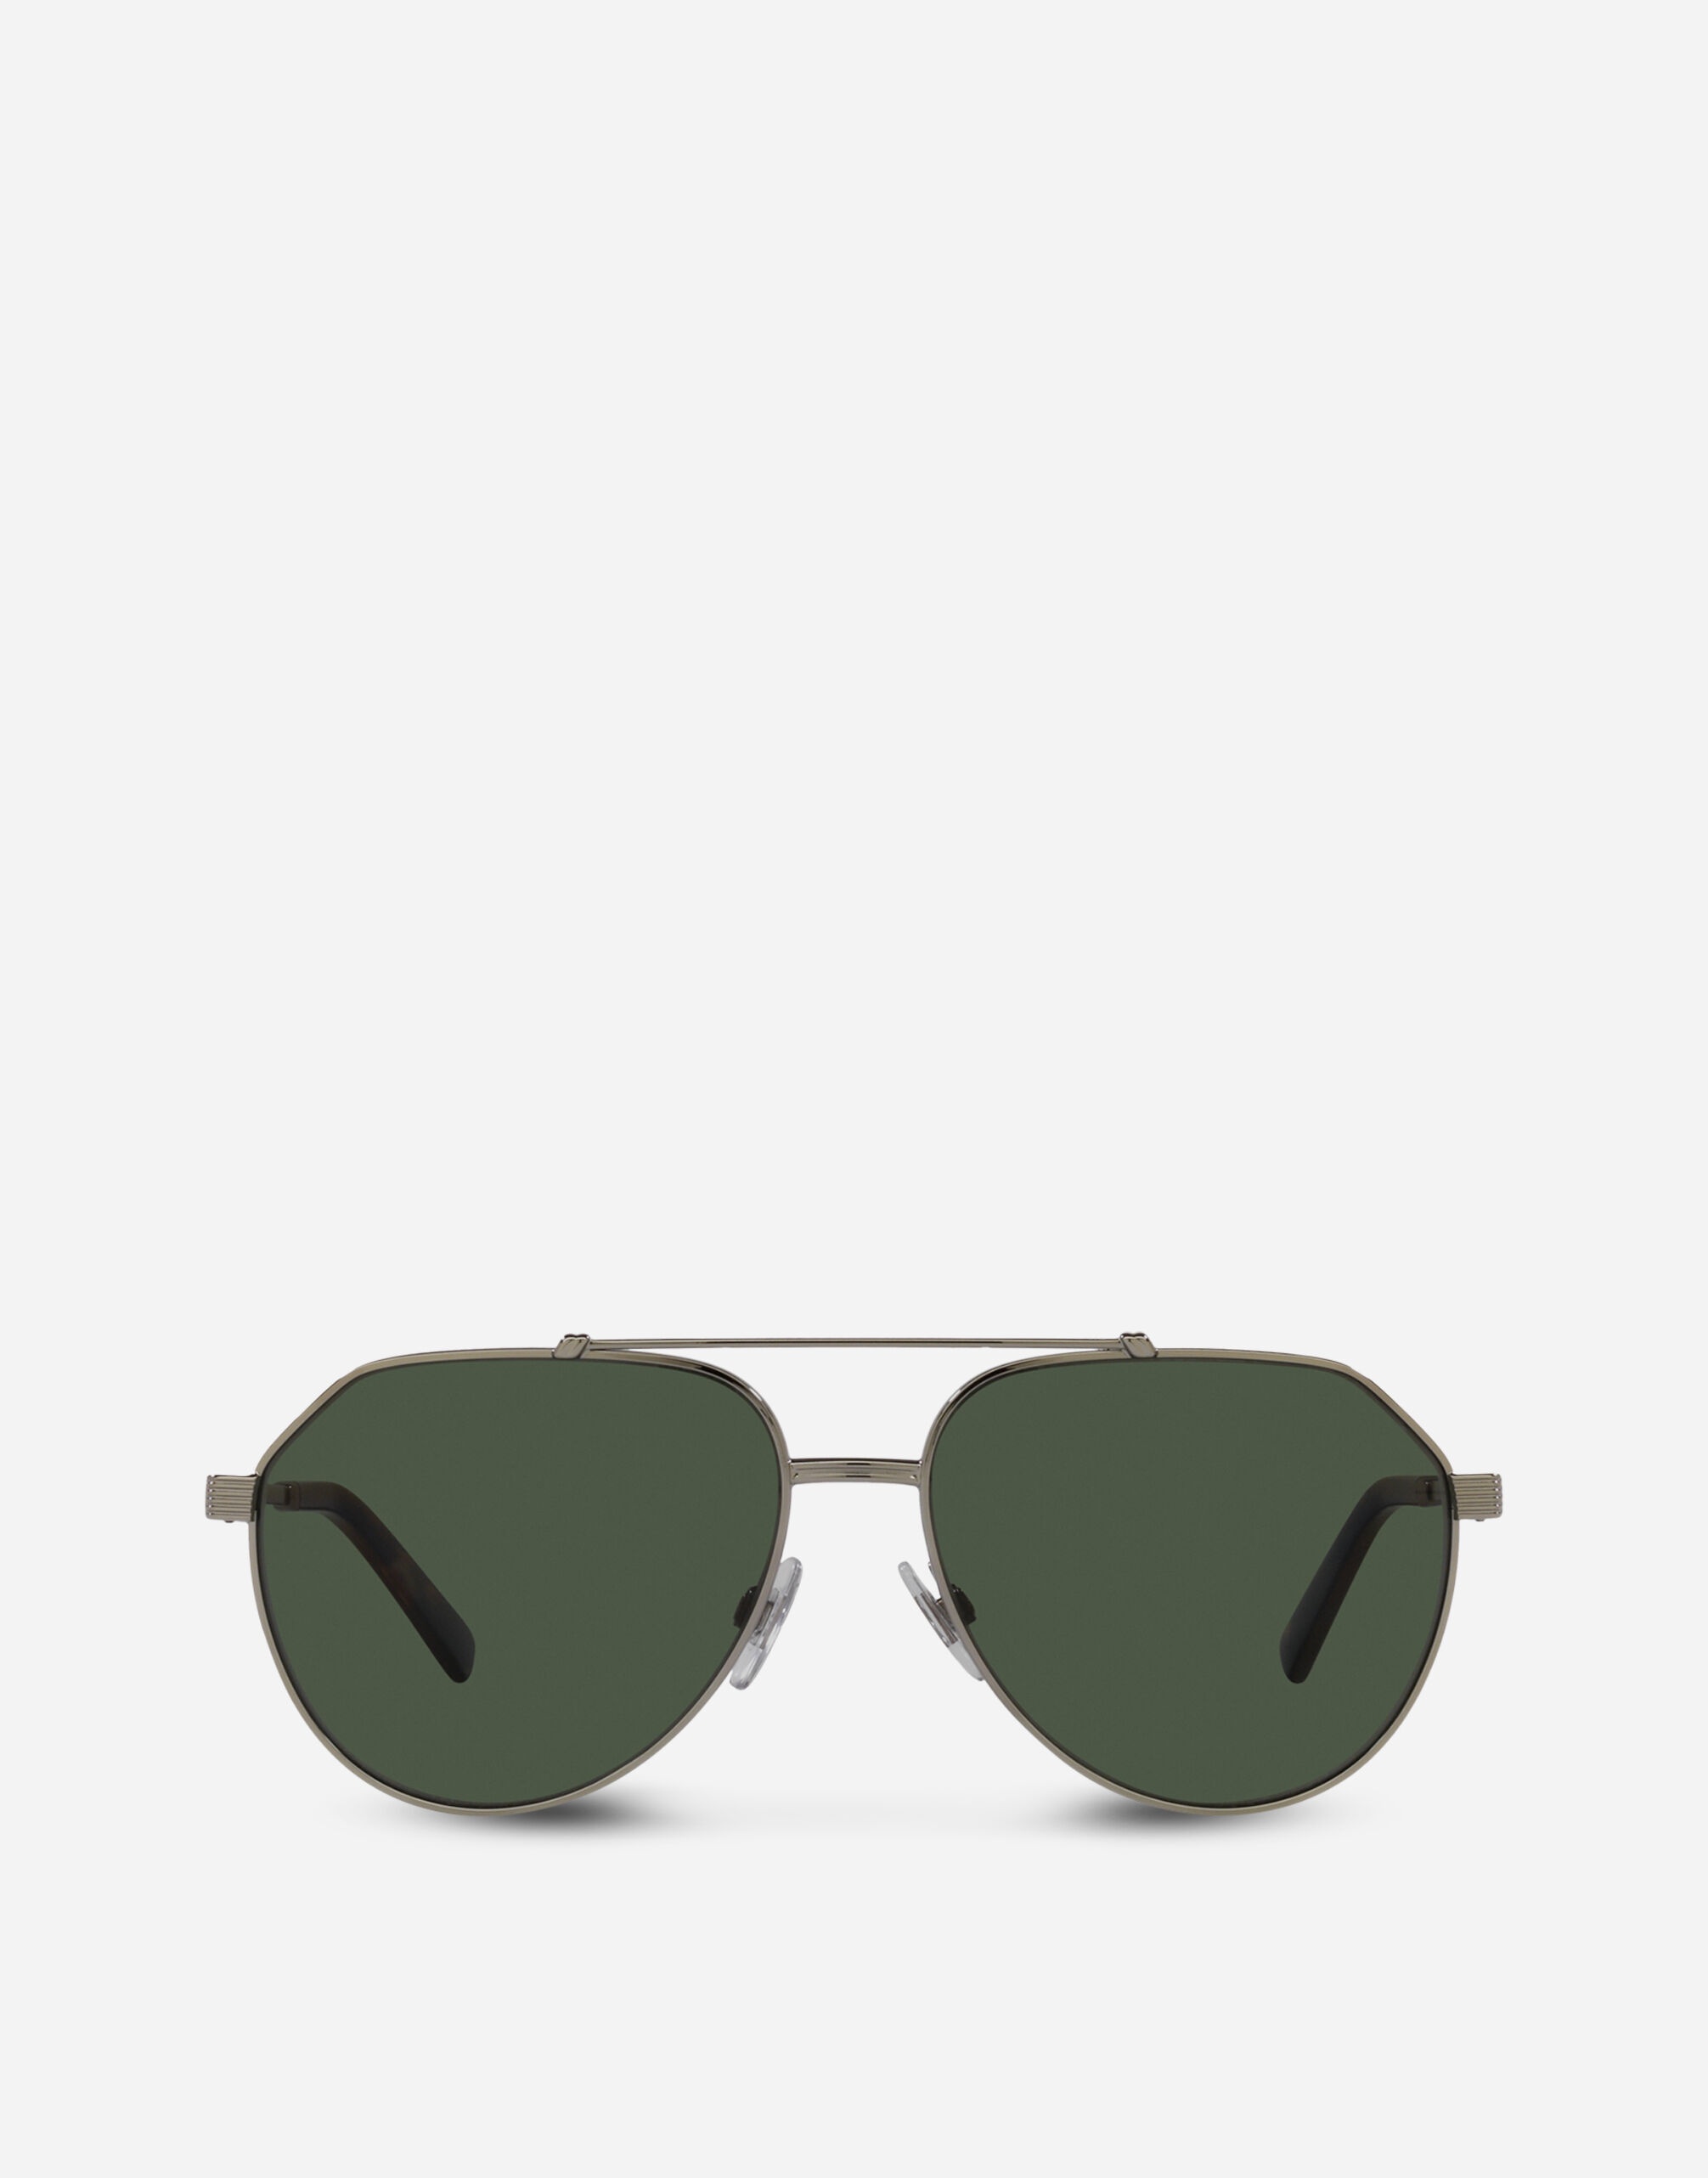 Gros grain sunglasses - 1